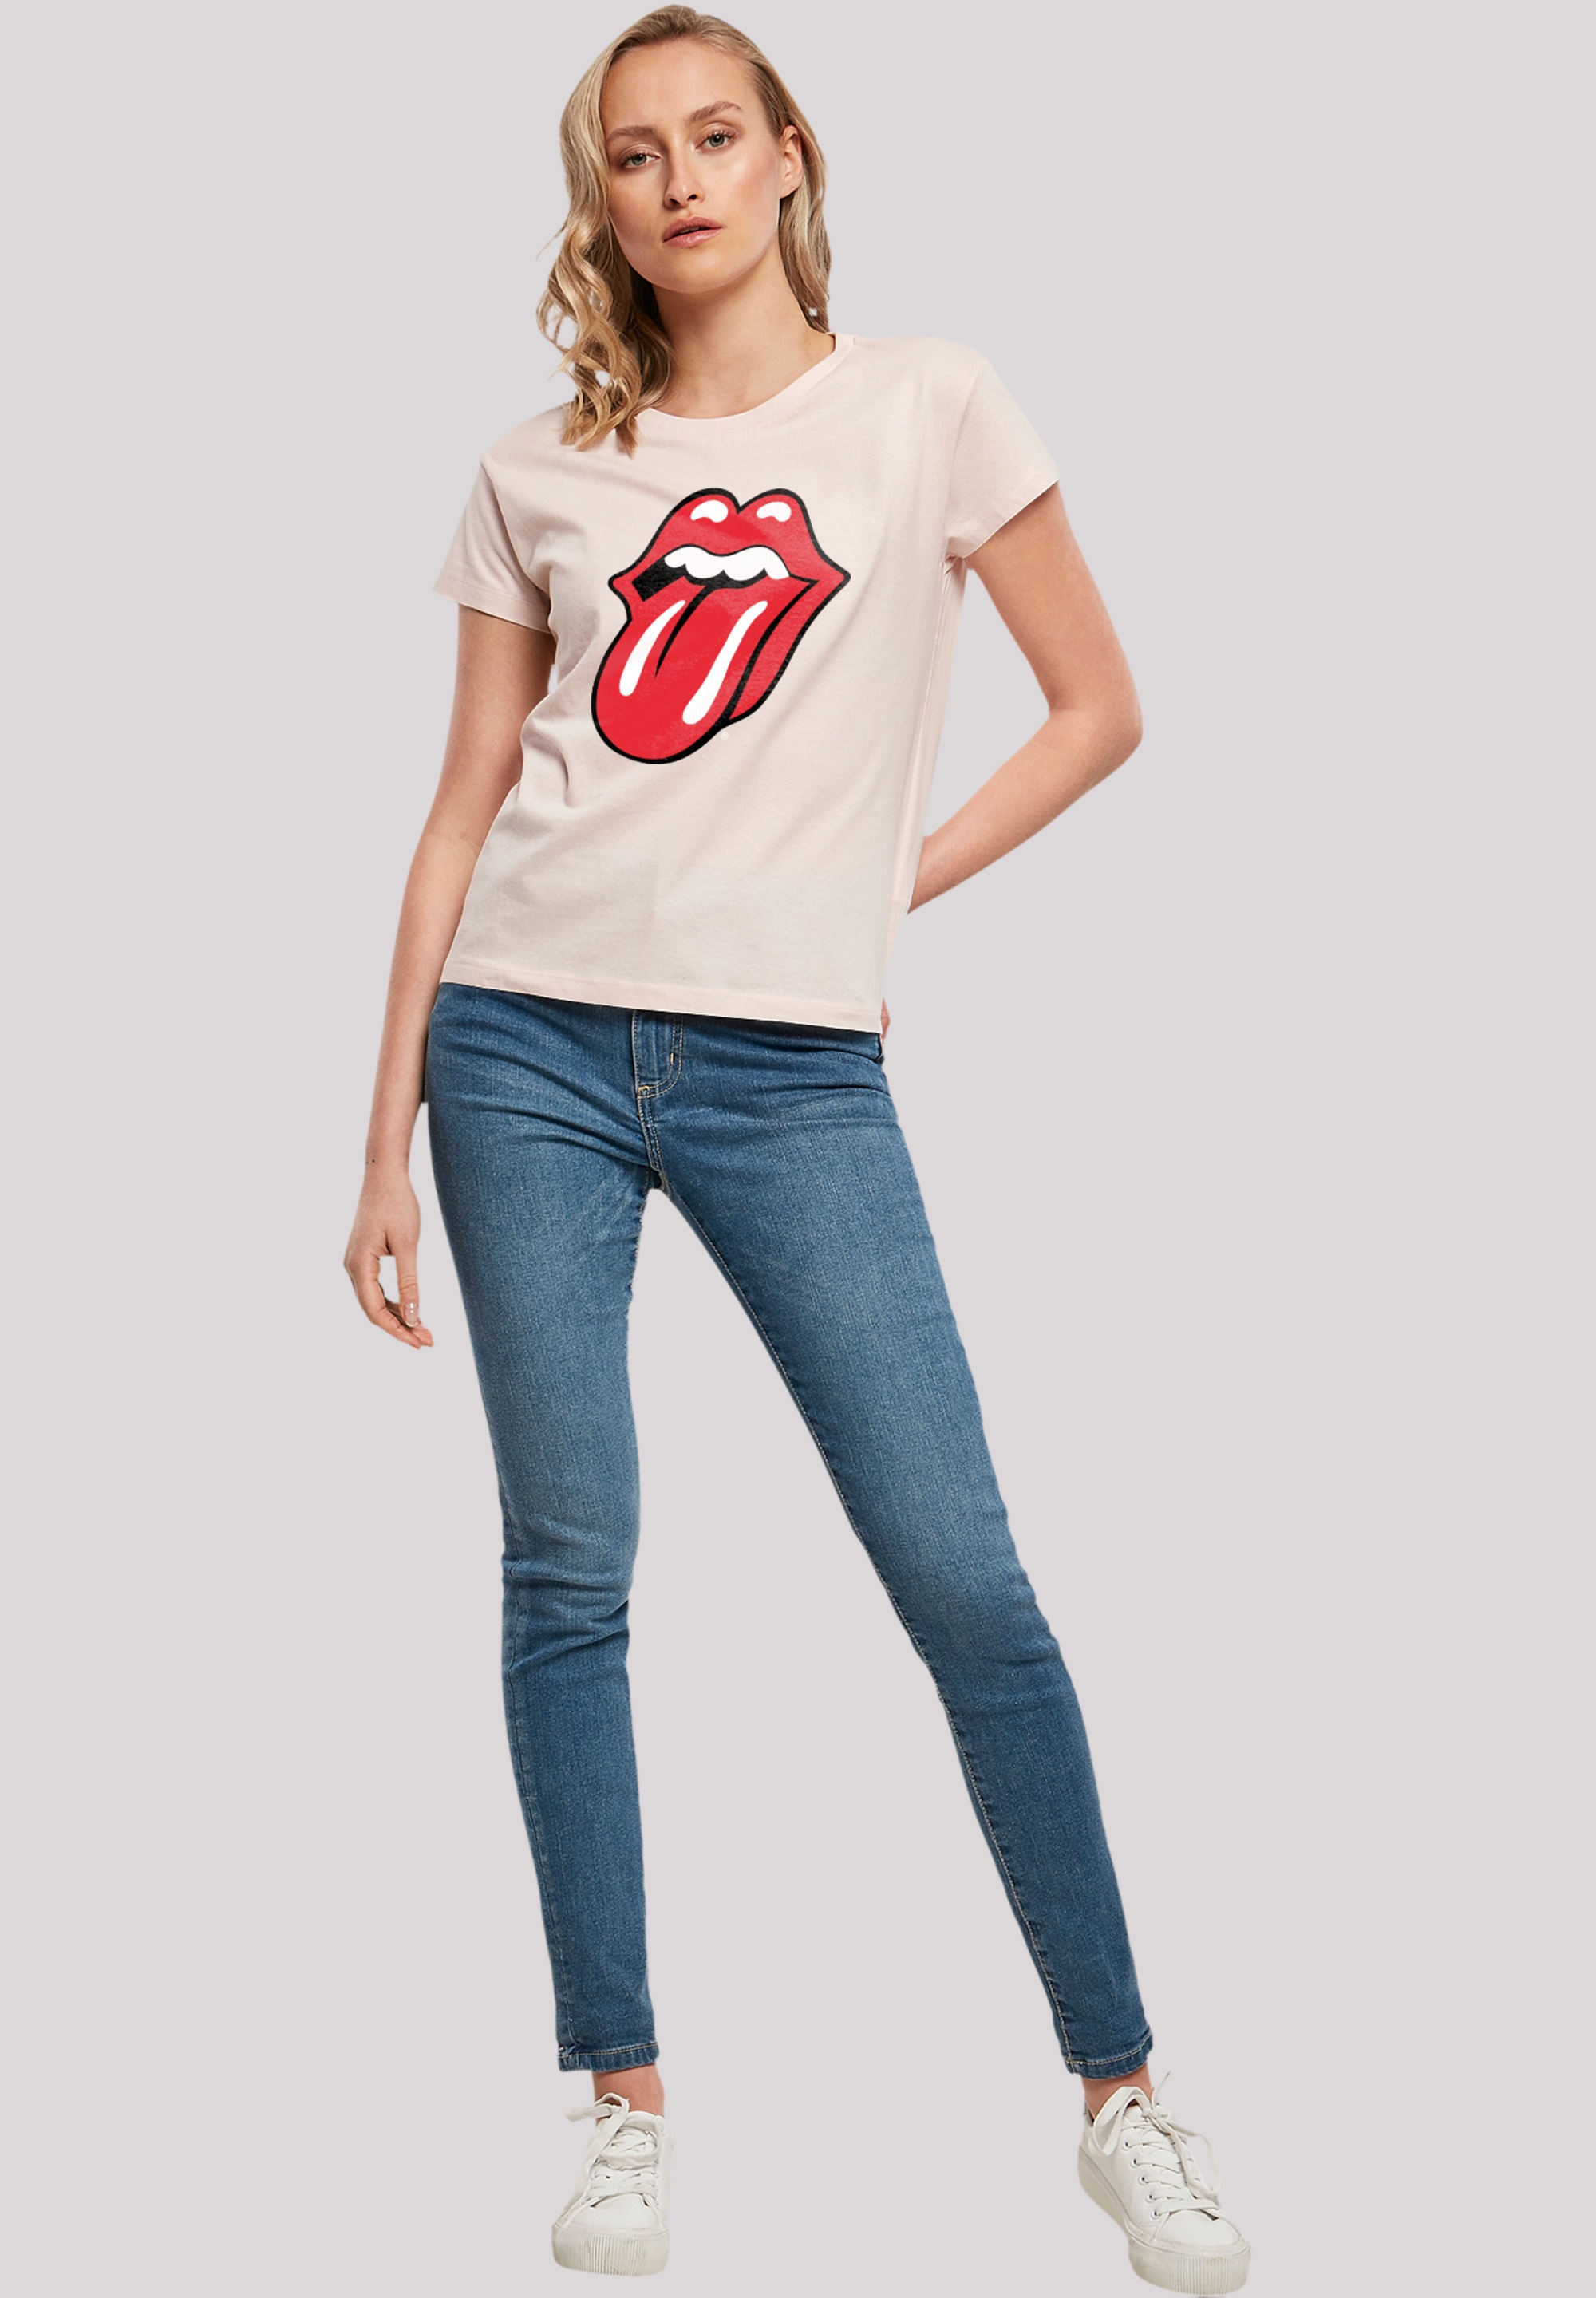 F4NT4STIC Print I\'m | T-Shirt Tongue«, Stones Classic Rolling walking »The online